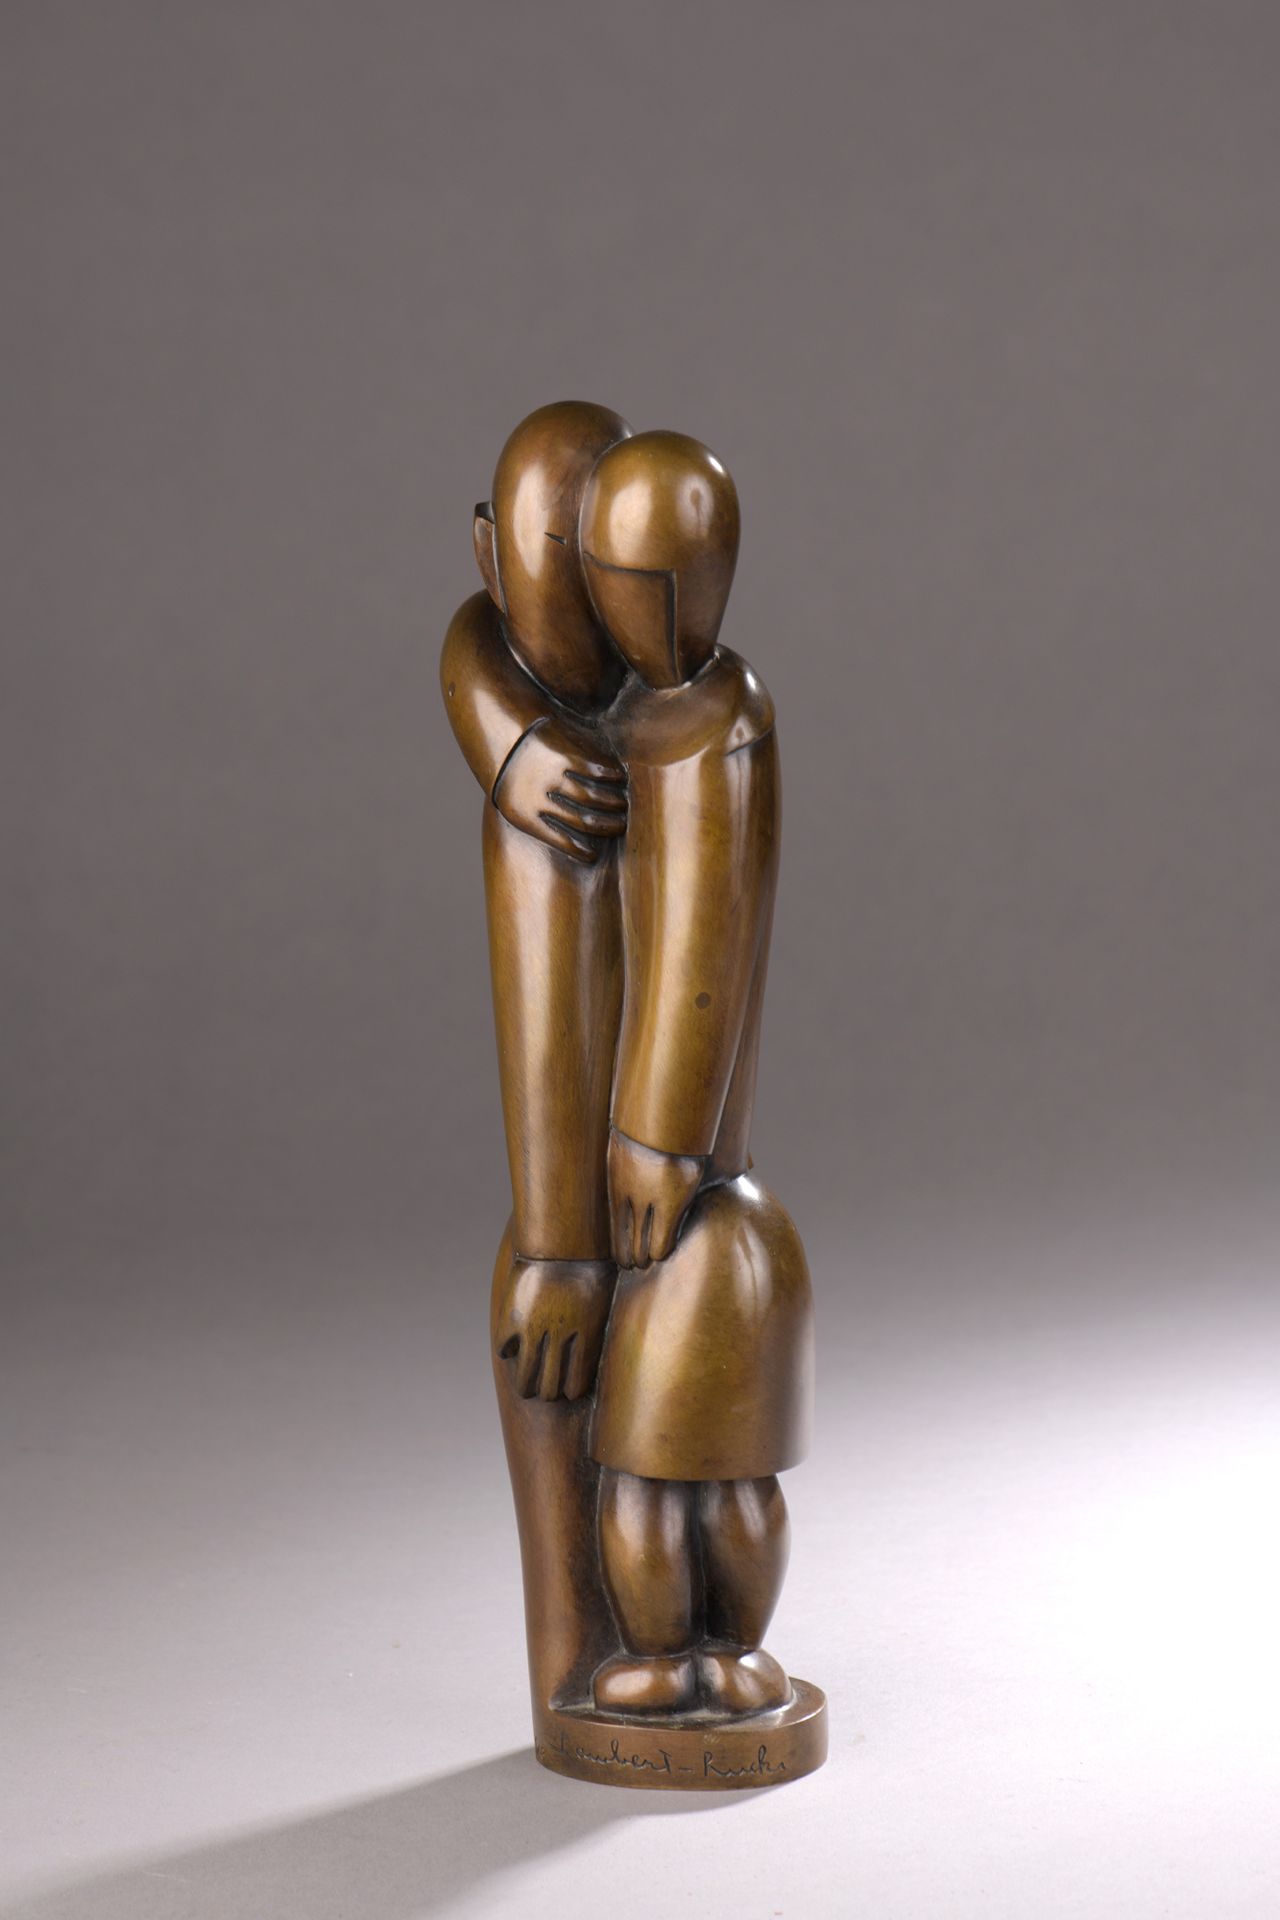 Null Jean LAMBERT-RUCKI (1888-1967)

The lovers, 1923

Proof in gilded bronze wi&hellip;